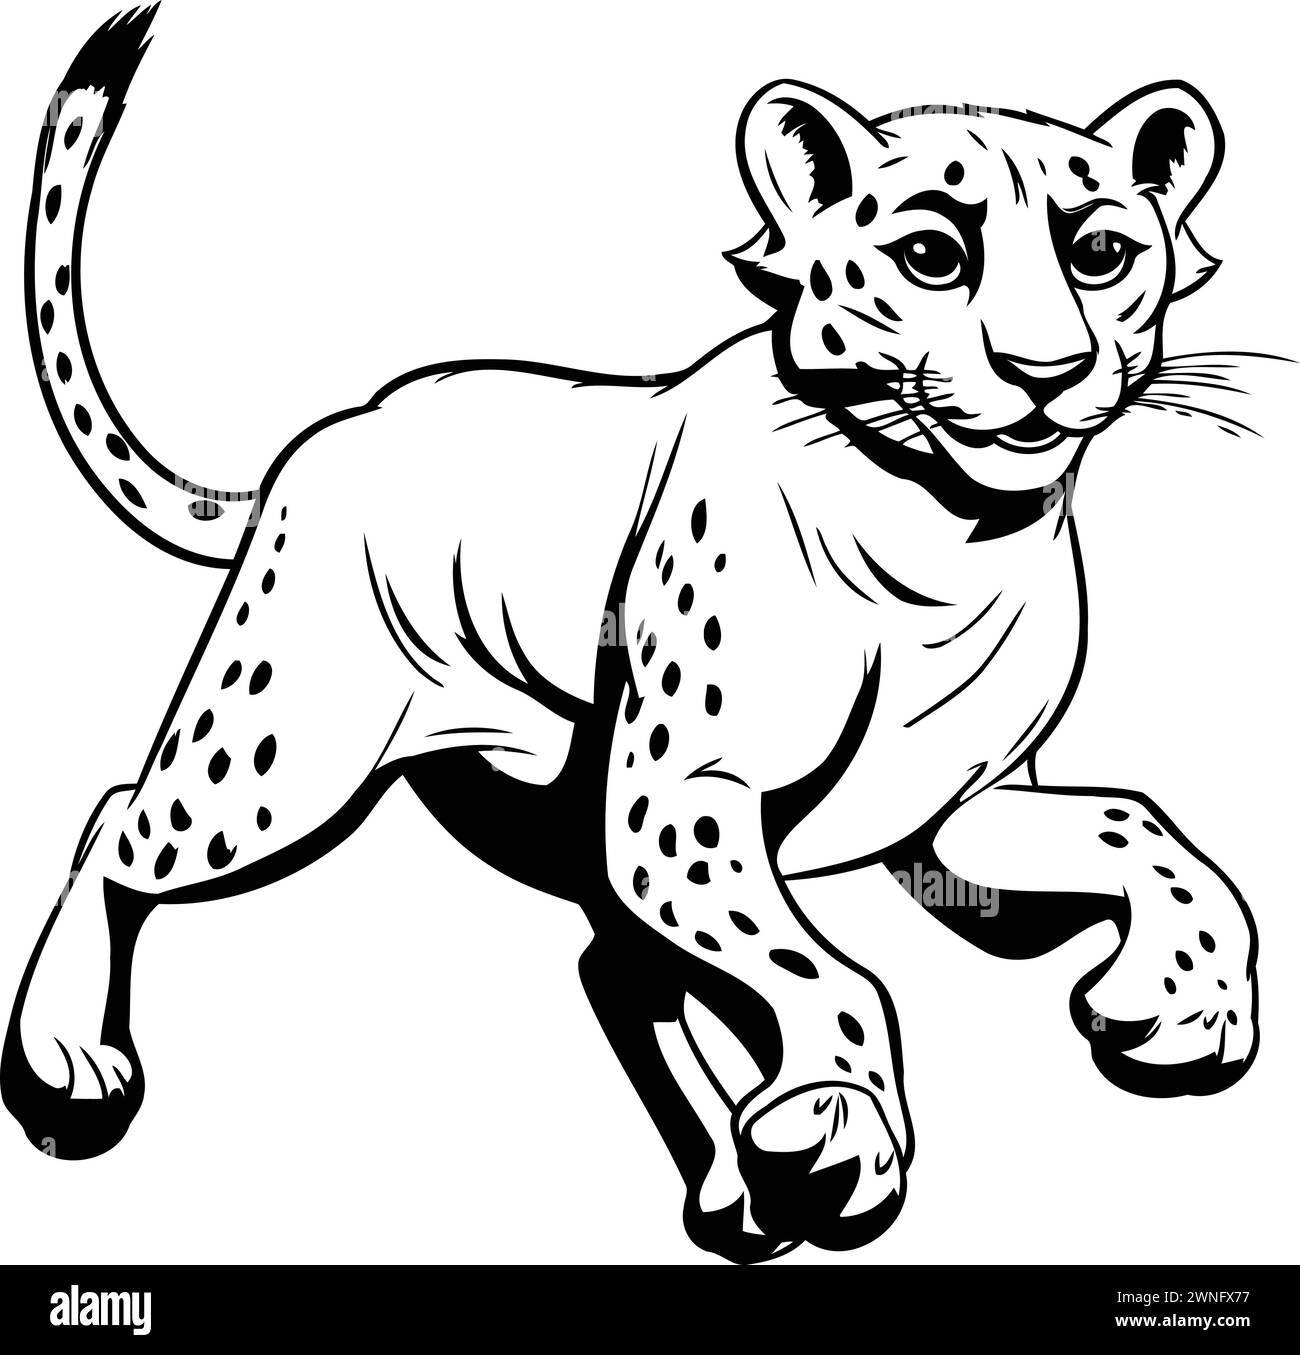 Cheetah Running - Black and White Cartoon Illustration. Vector Stock Vector